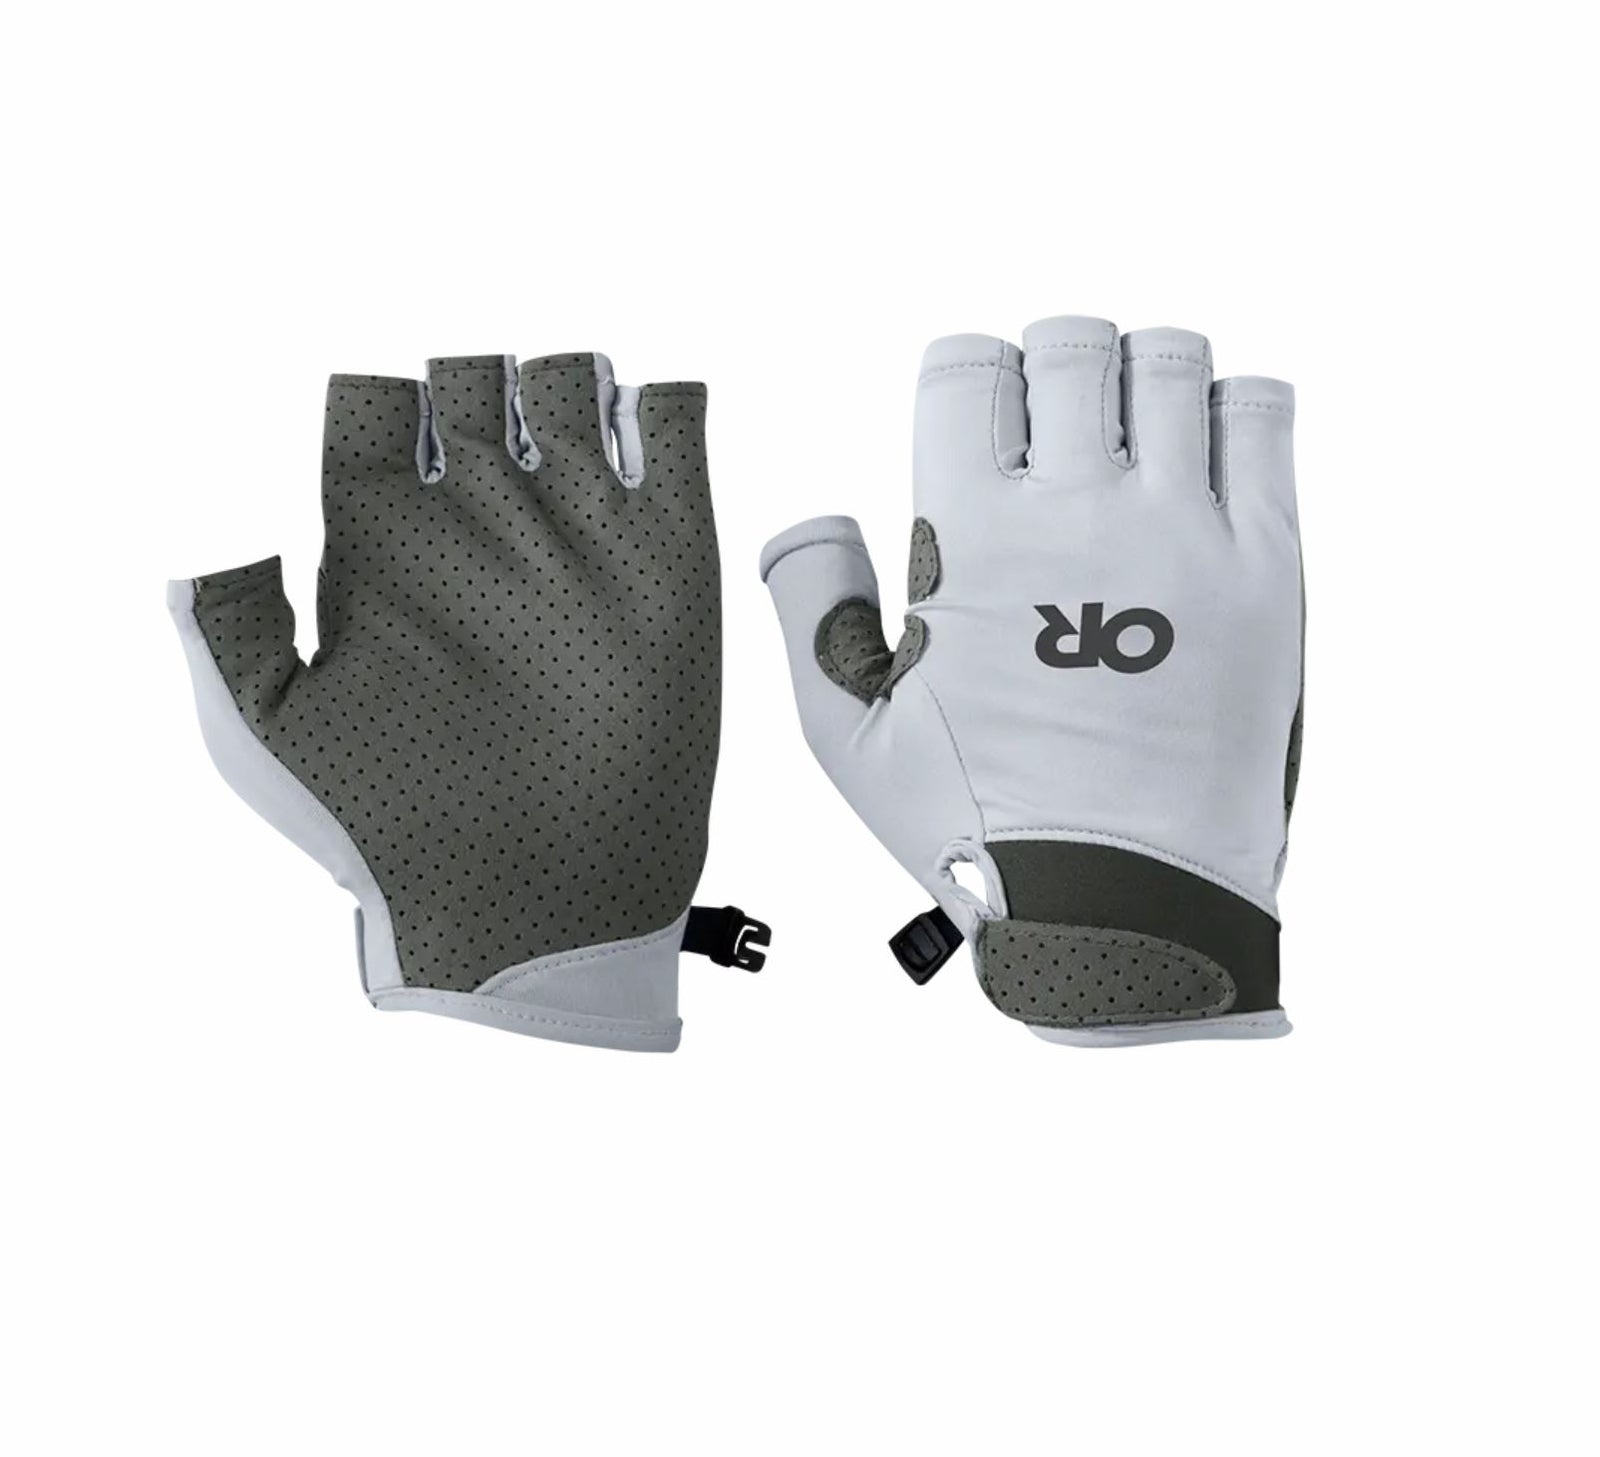 pair of gloves